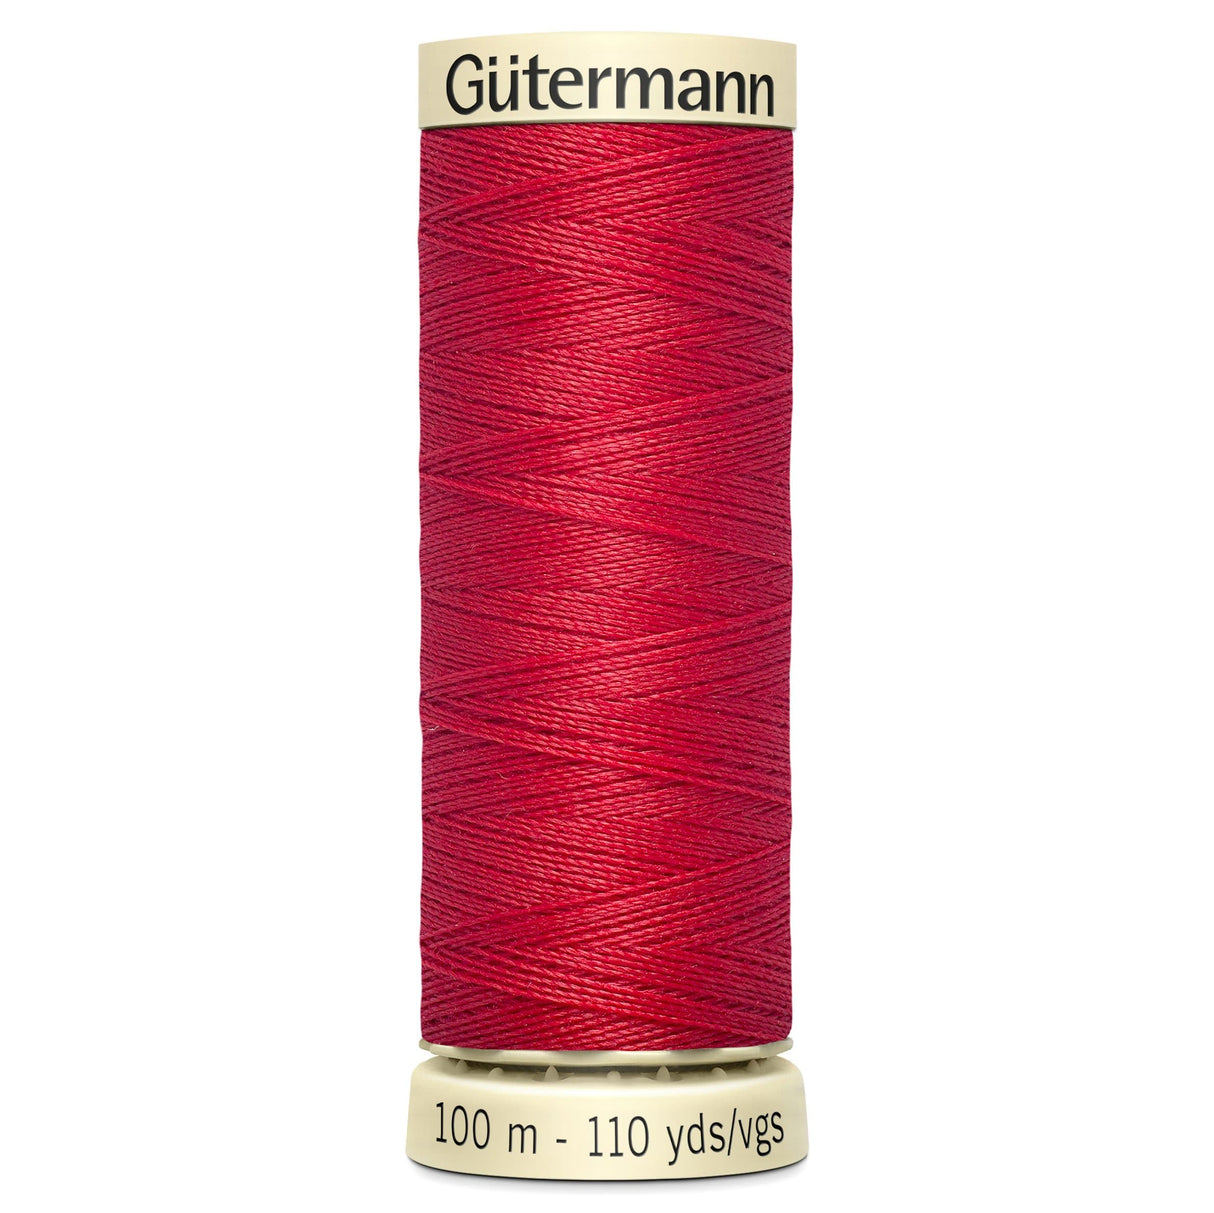 Groves Haberdashery 365 Gutermann Thread Sewing Cotton 100 m Black to Pink